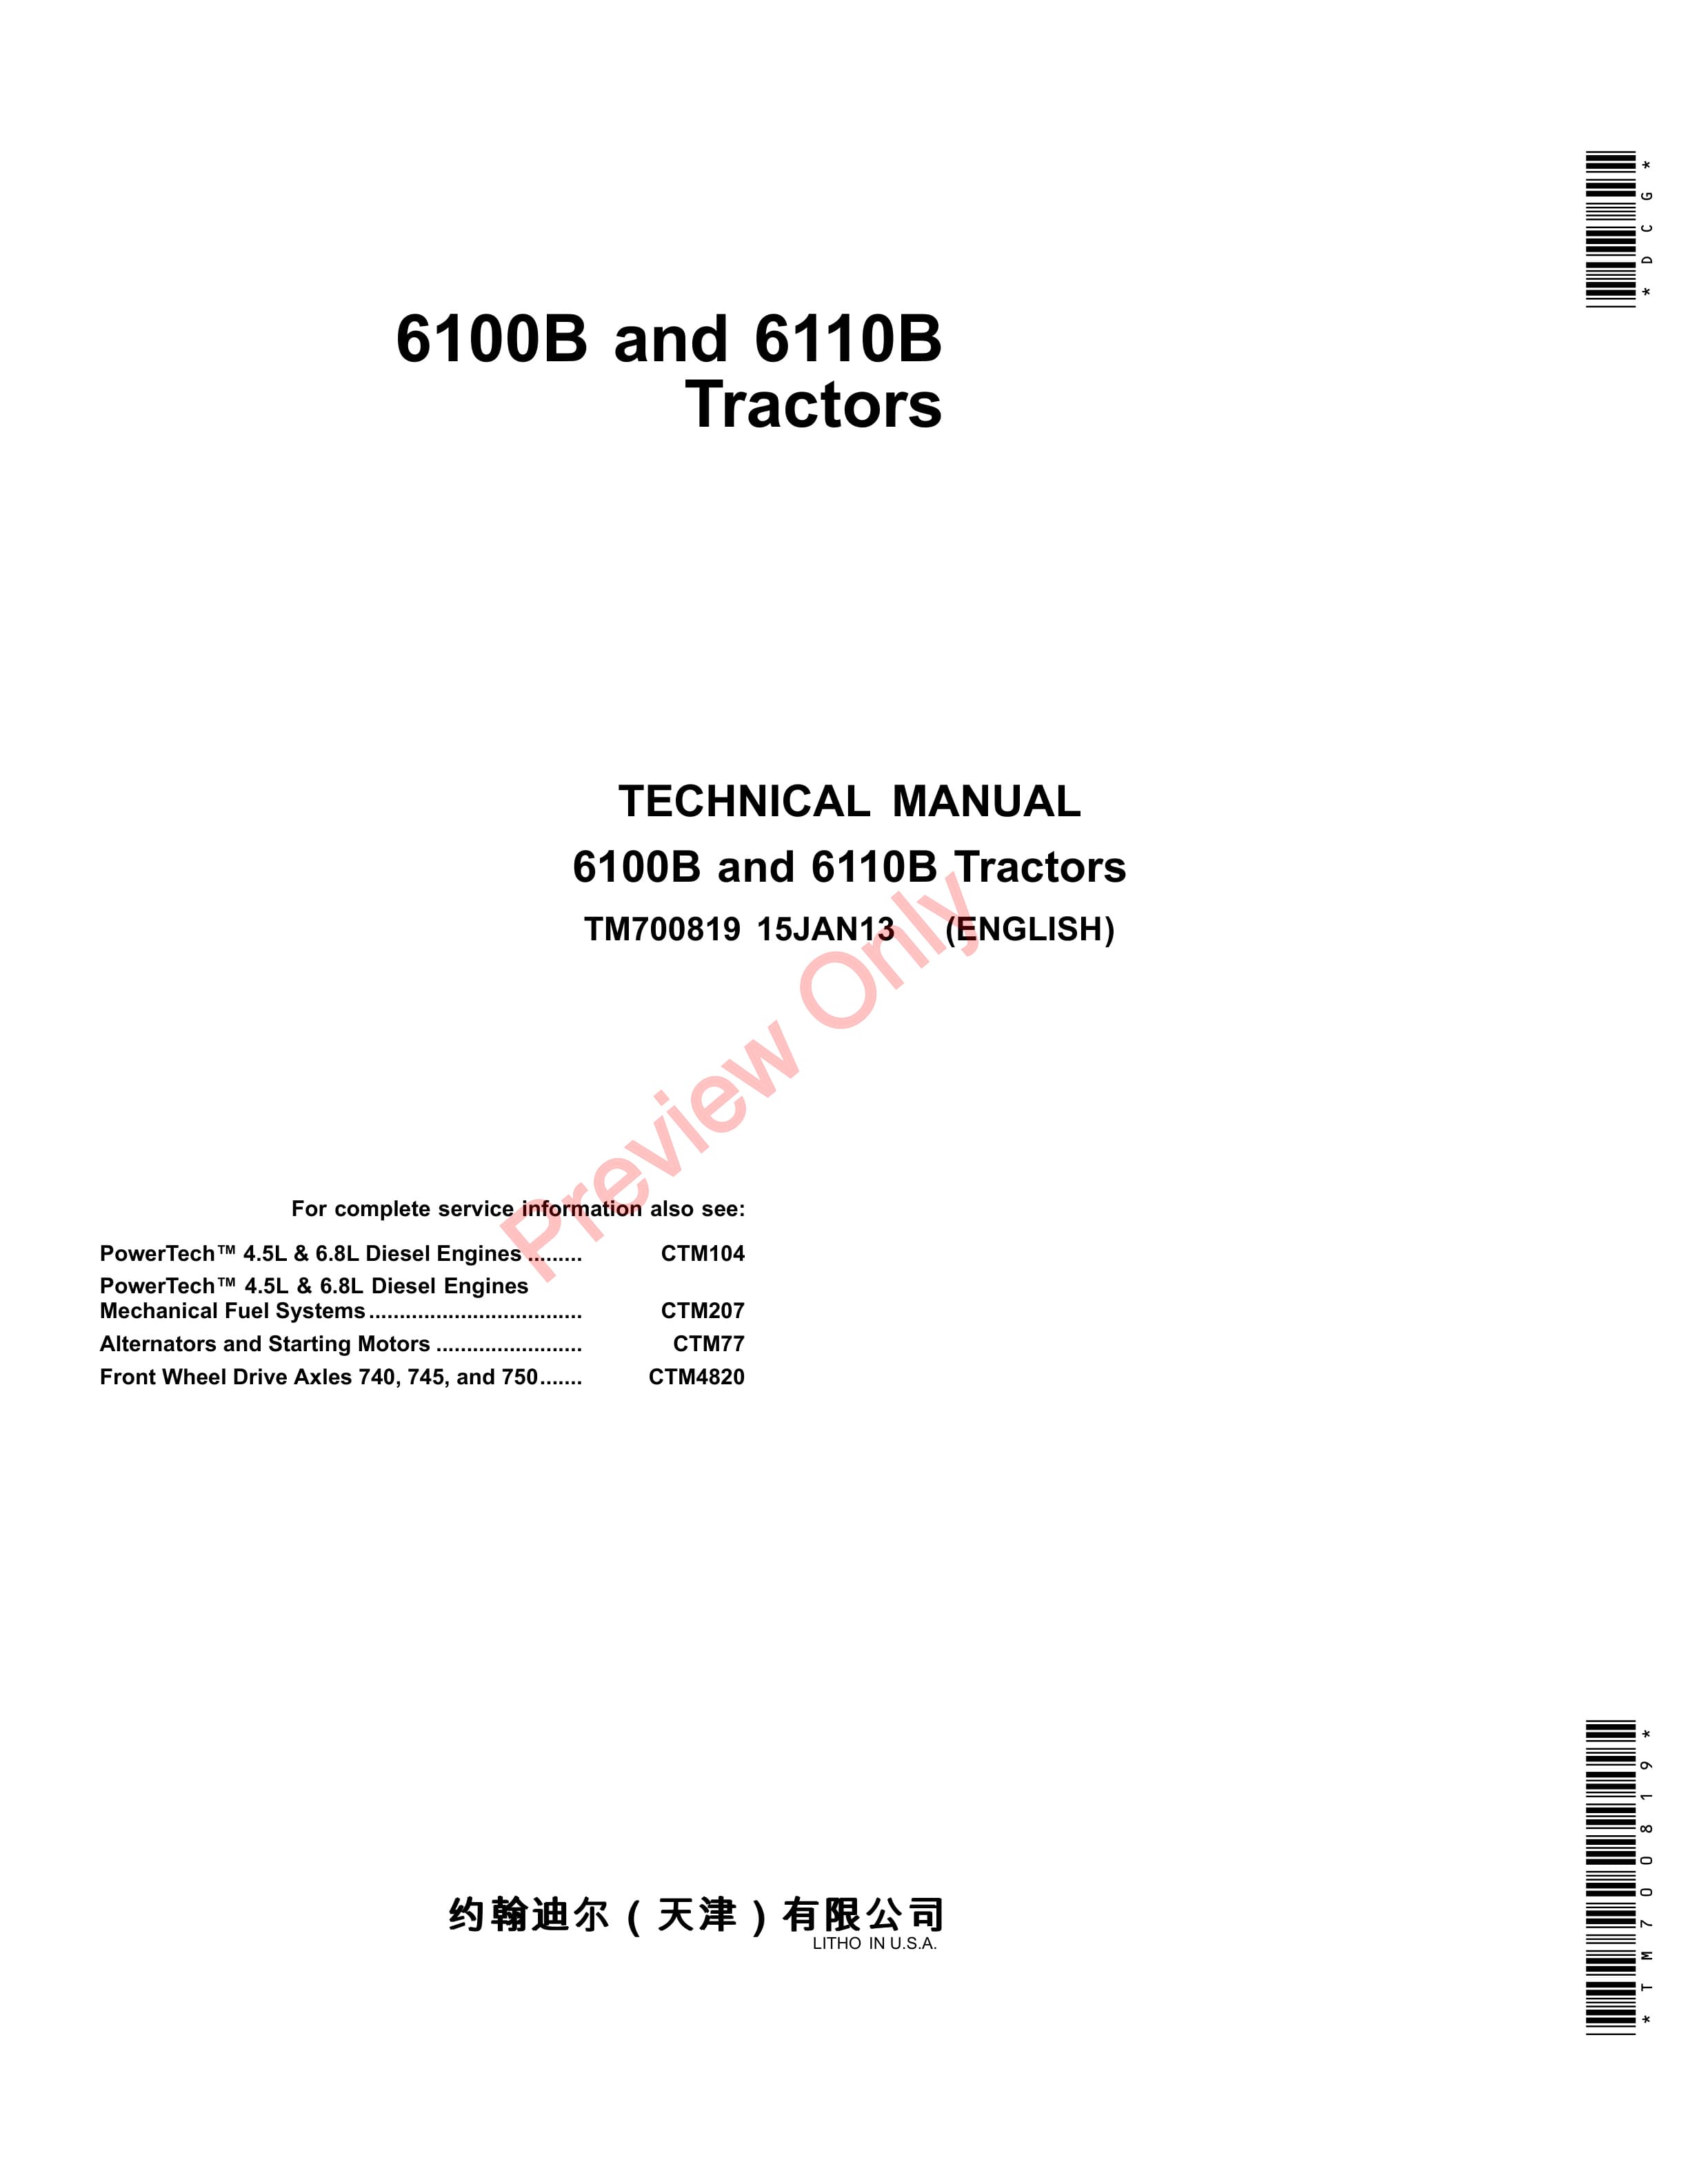 John Deere 6100B and 6110B Tractors Technical Manual TM700819 15JAN13 1